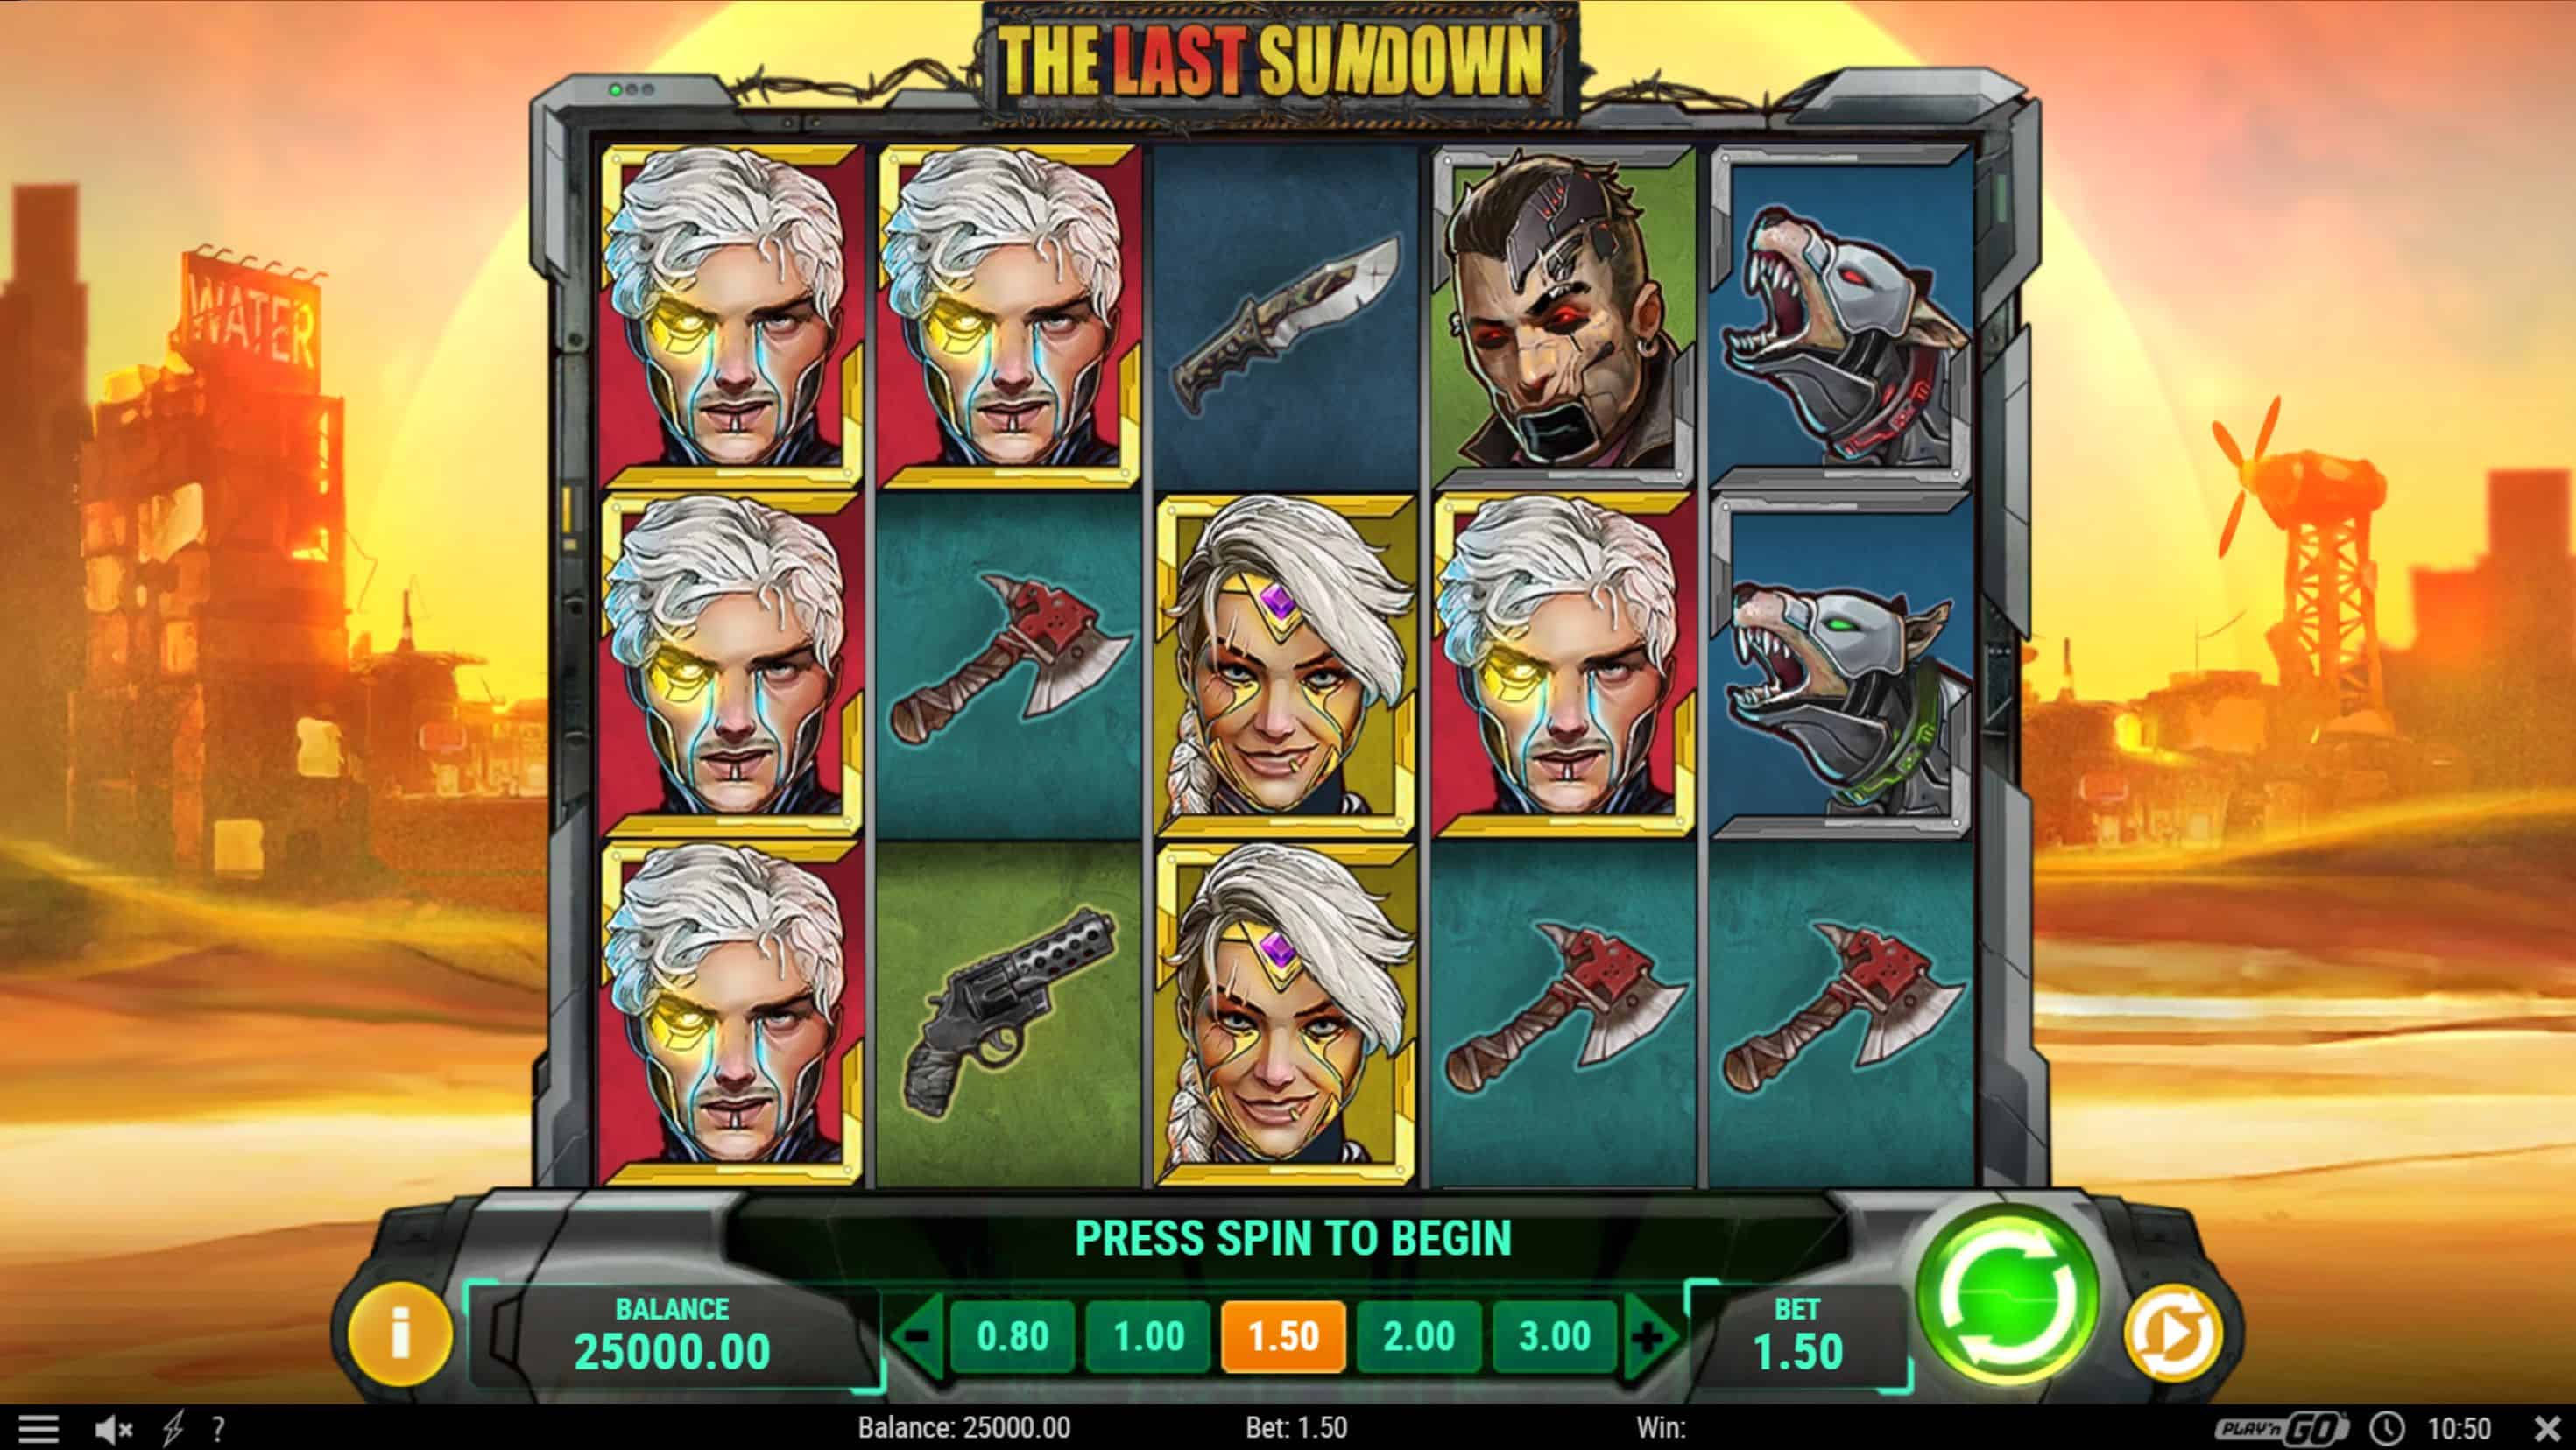 The Last Sundown Slot Game Free Play at Casino Ireland 01